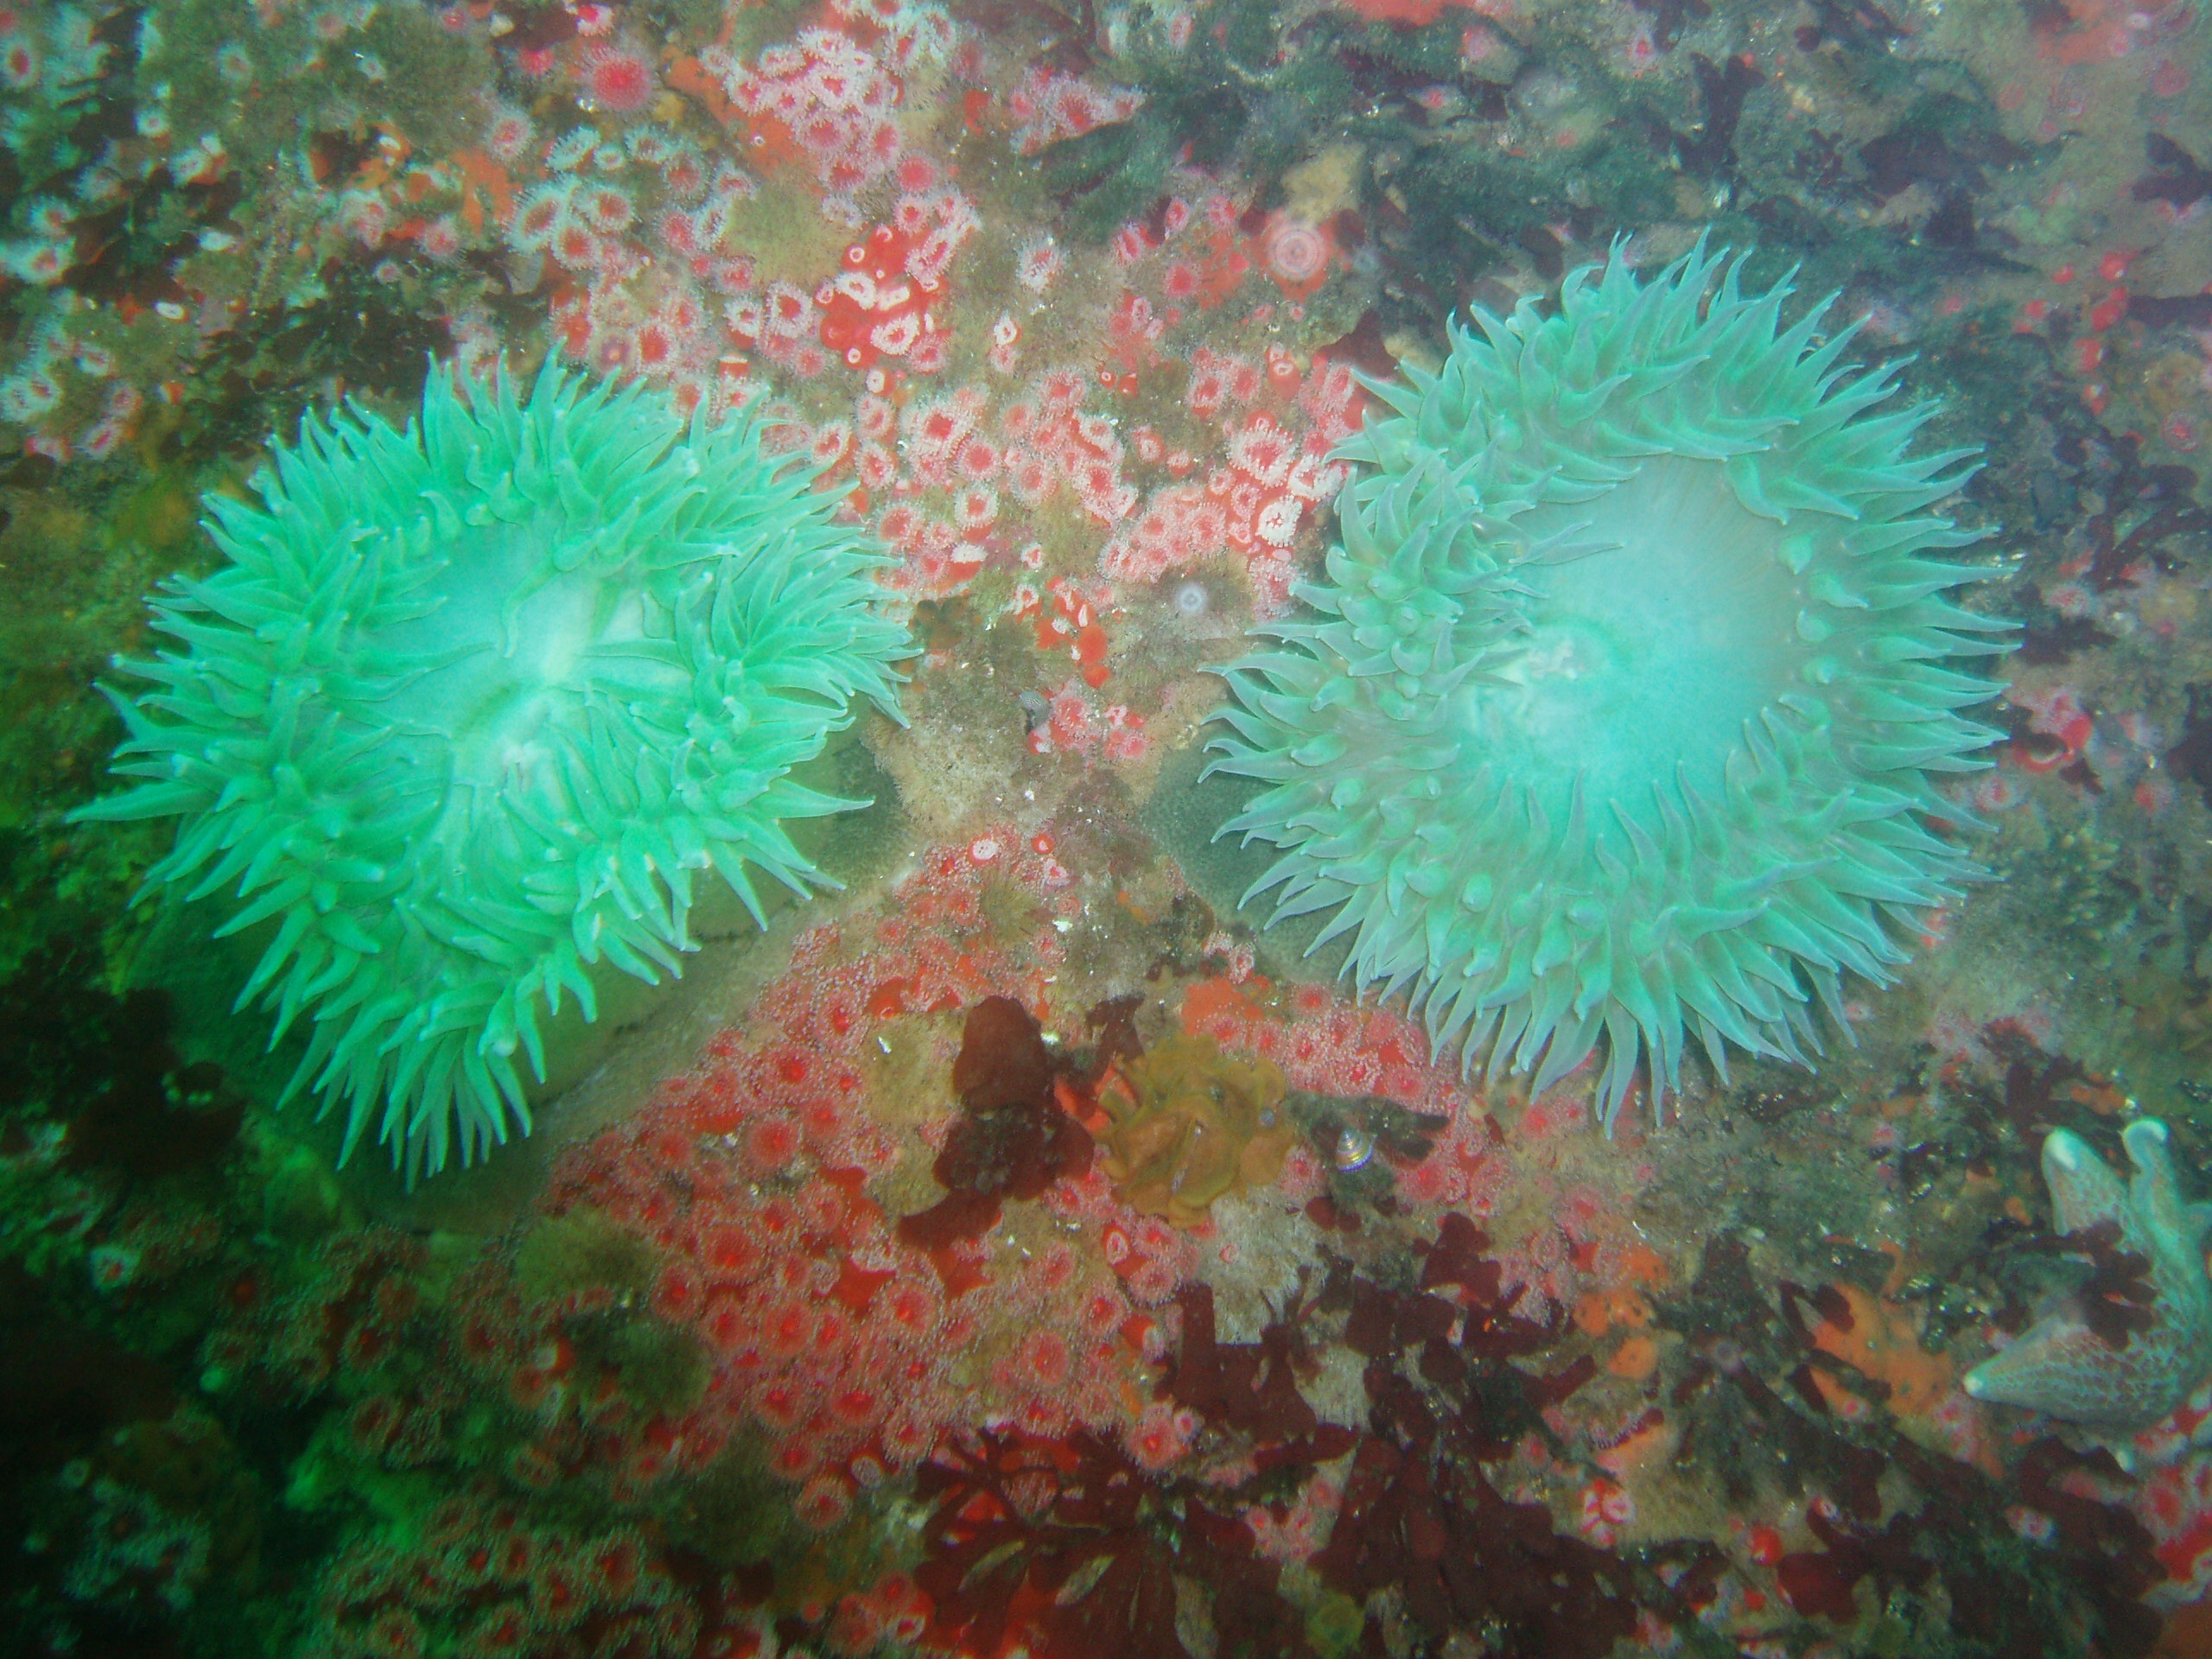 Green anemones